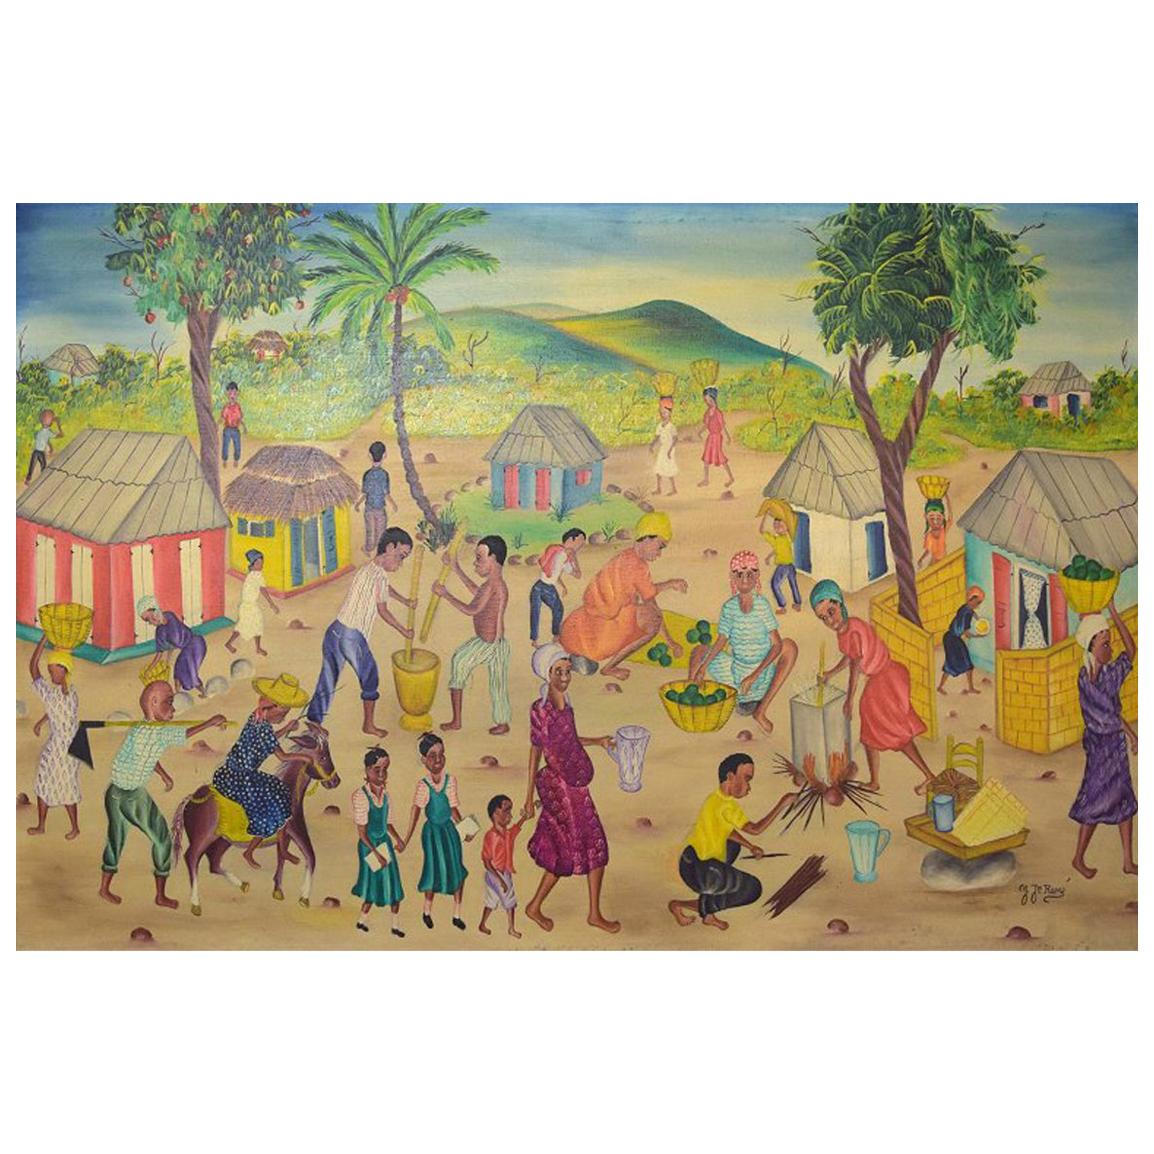 Y. Jn. René, Haitian Artist, Naivist School, Oil on Canvas, 1970s